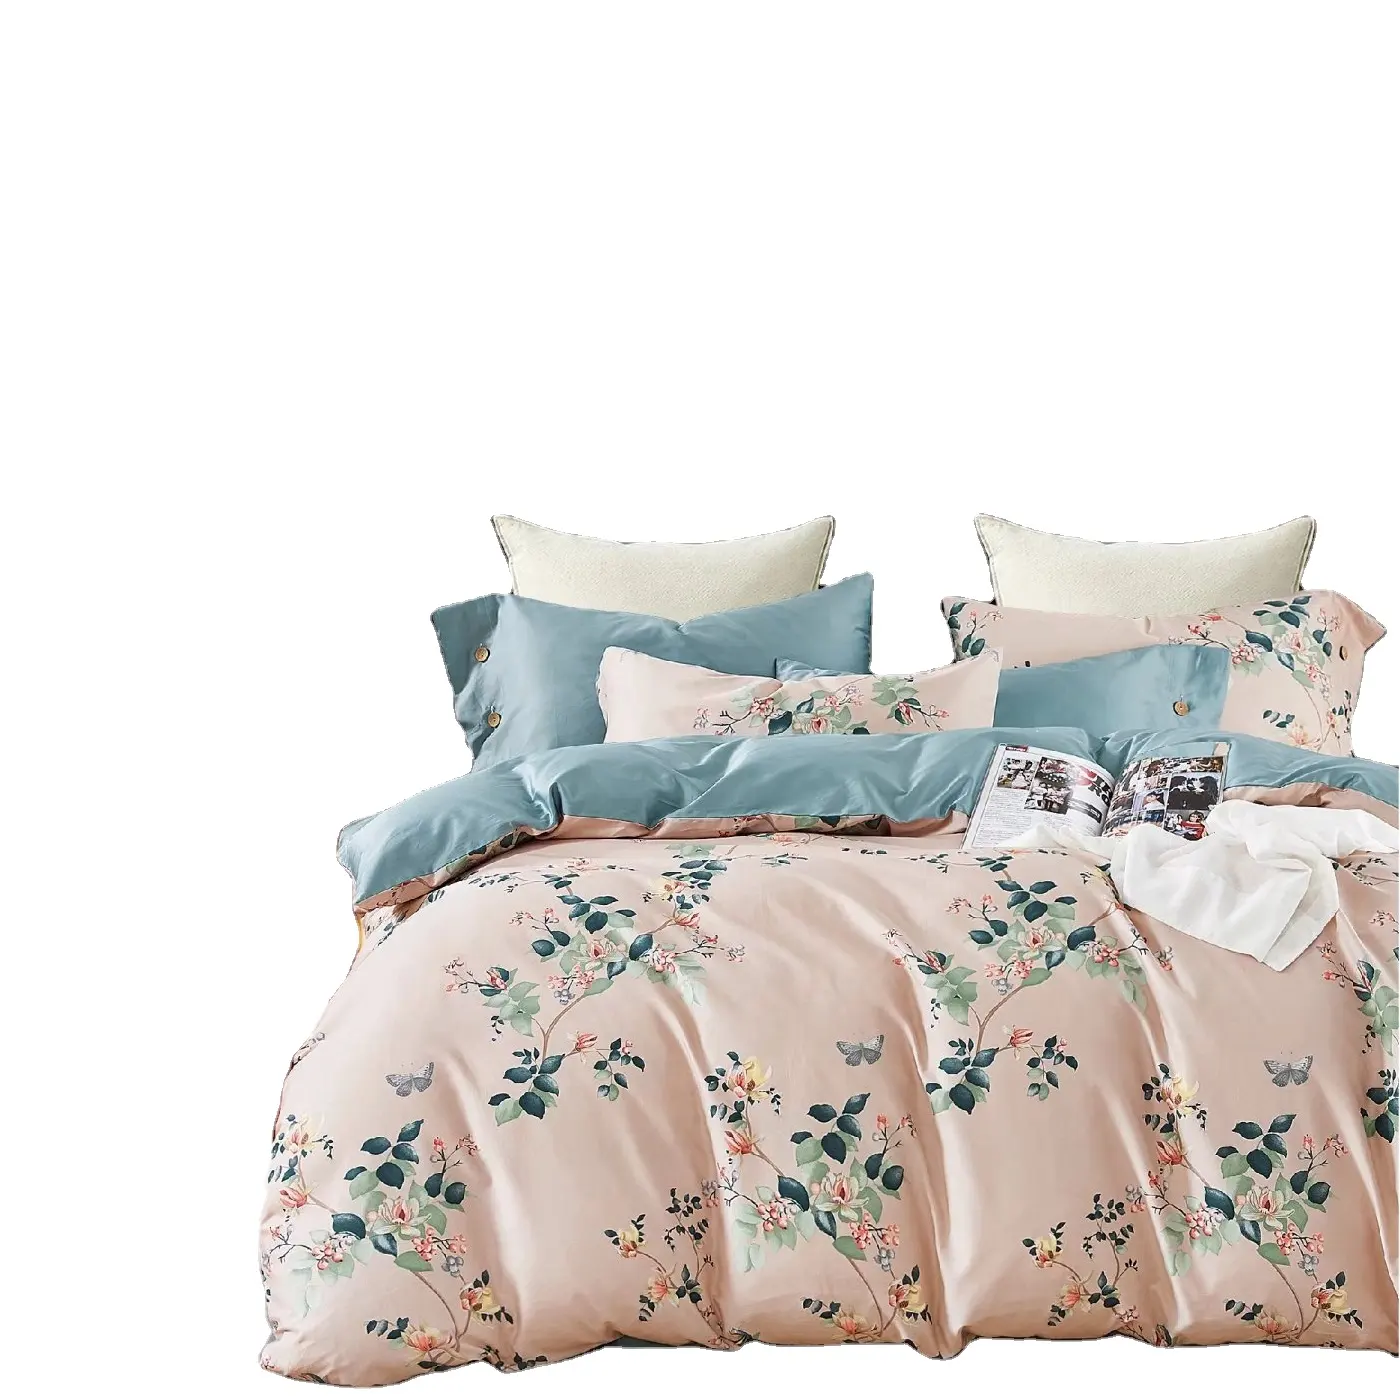 Luxury 100% cotton bedding sets customized digital print designs bedsheet set home use KING Size comforter set